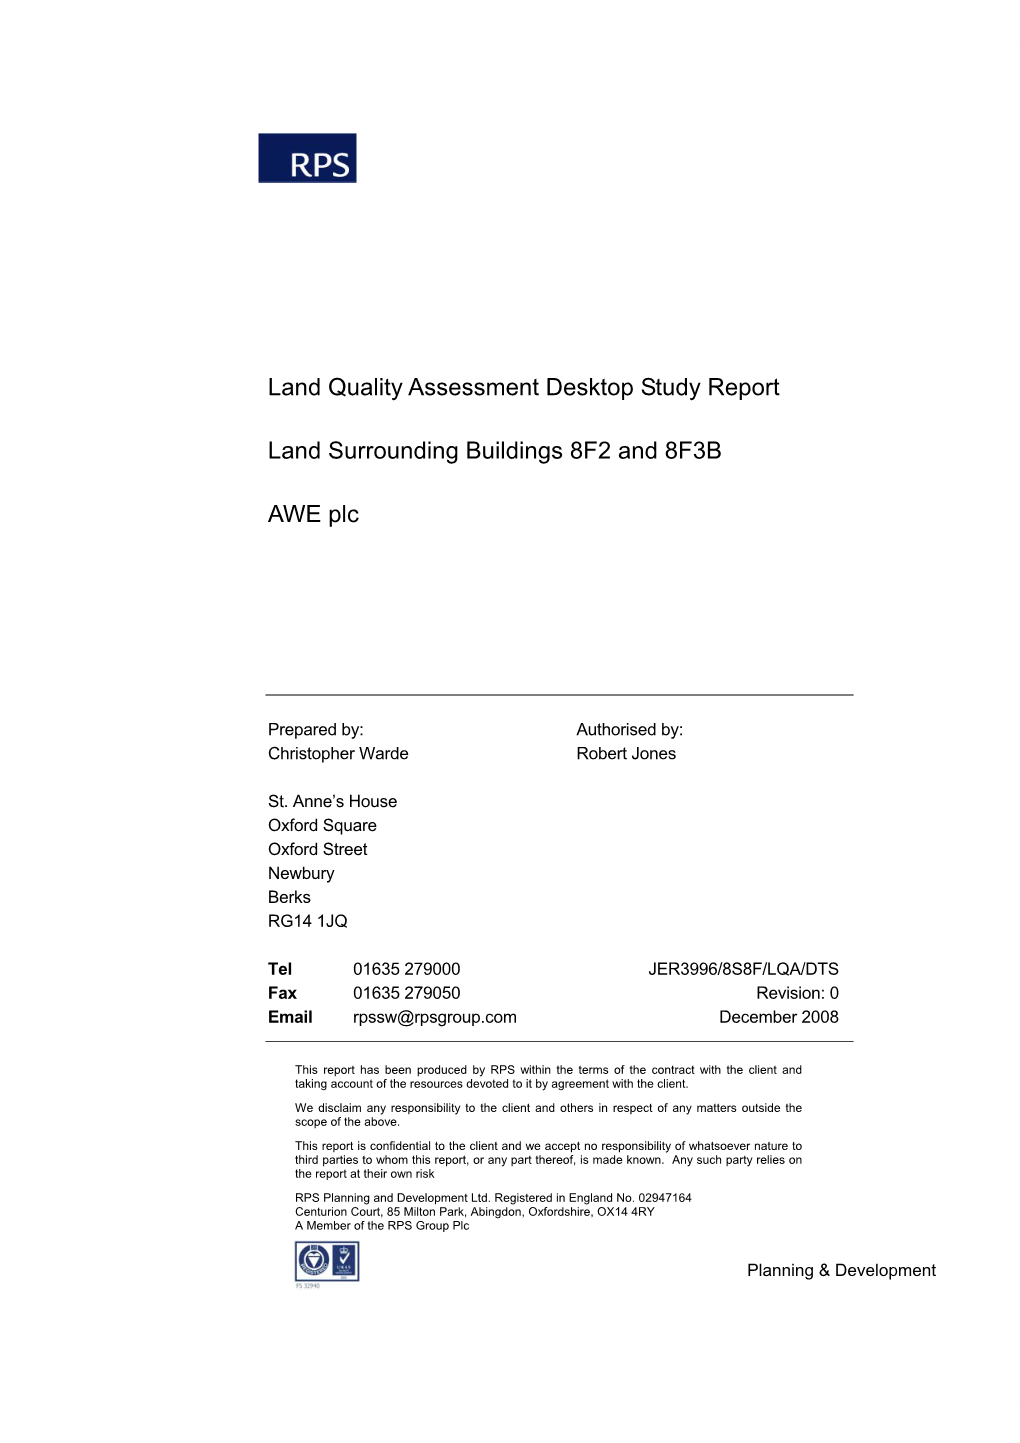 Contaminated Land Report Template V4